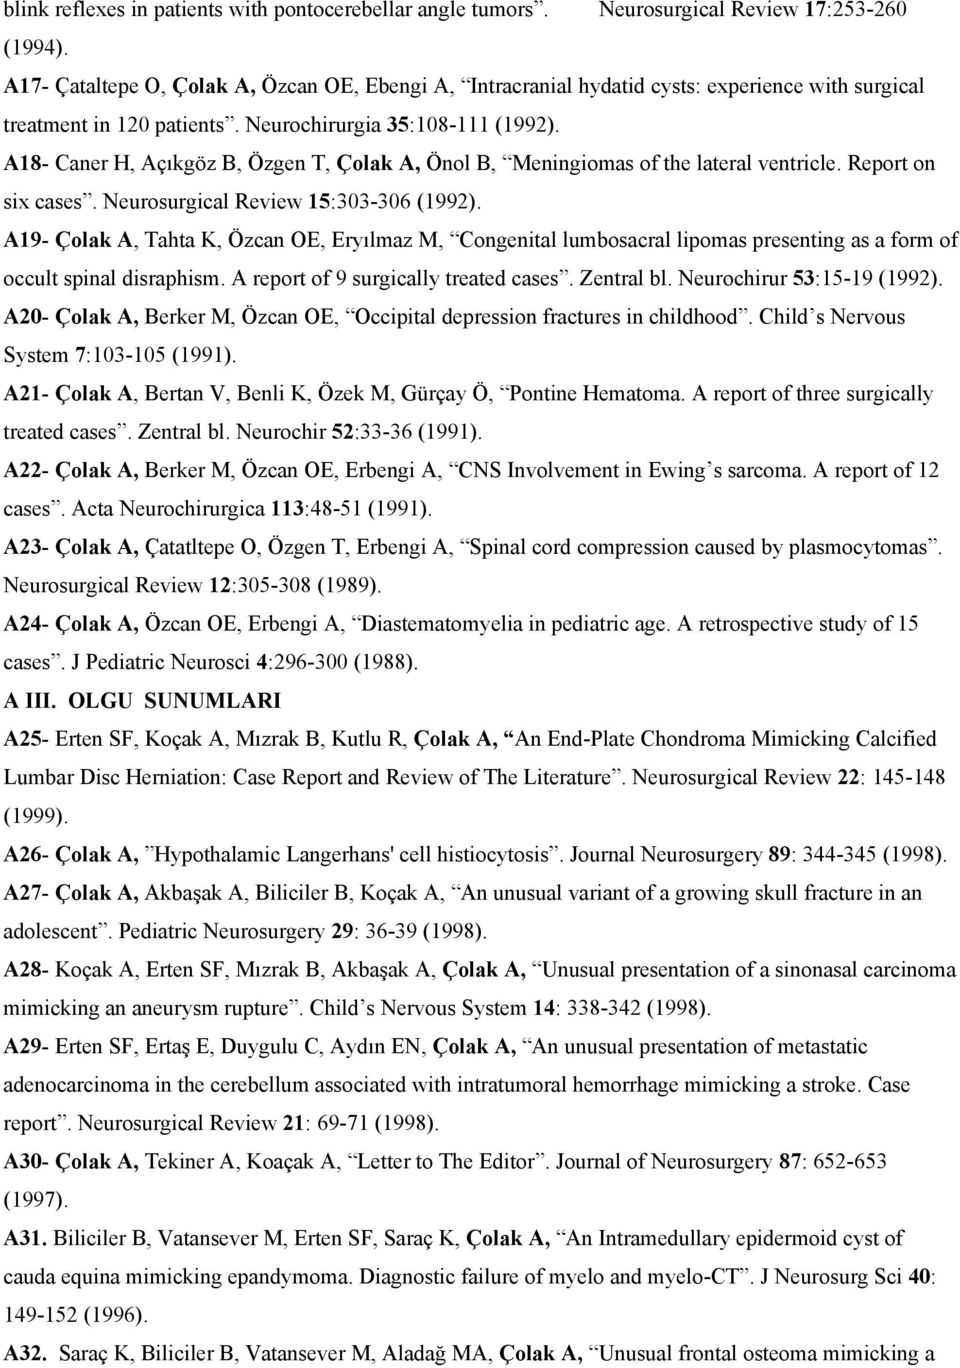 A18- Caner H, Açıkgöz B, Özgen T, Çolak A, Önol B, Meningiomas of the lateral ventricle. Report on six cases. Neurosurgical Review 15:303-306 (1992).